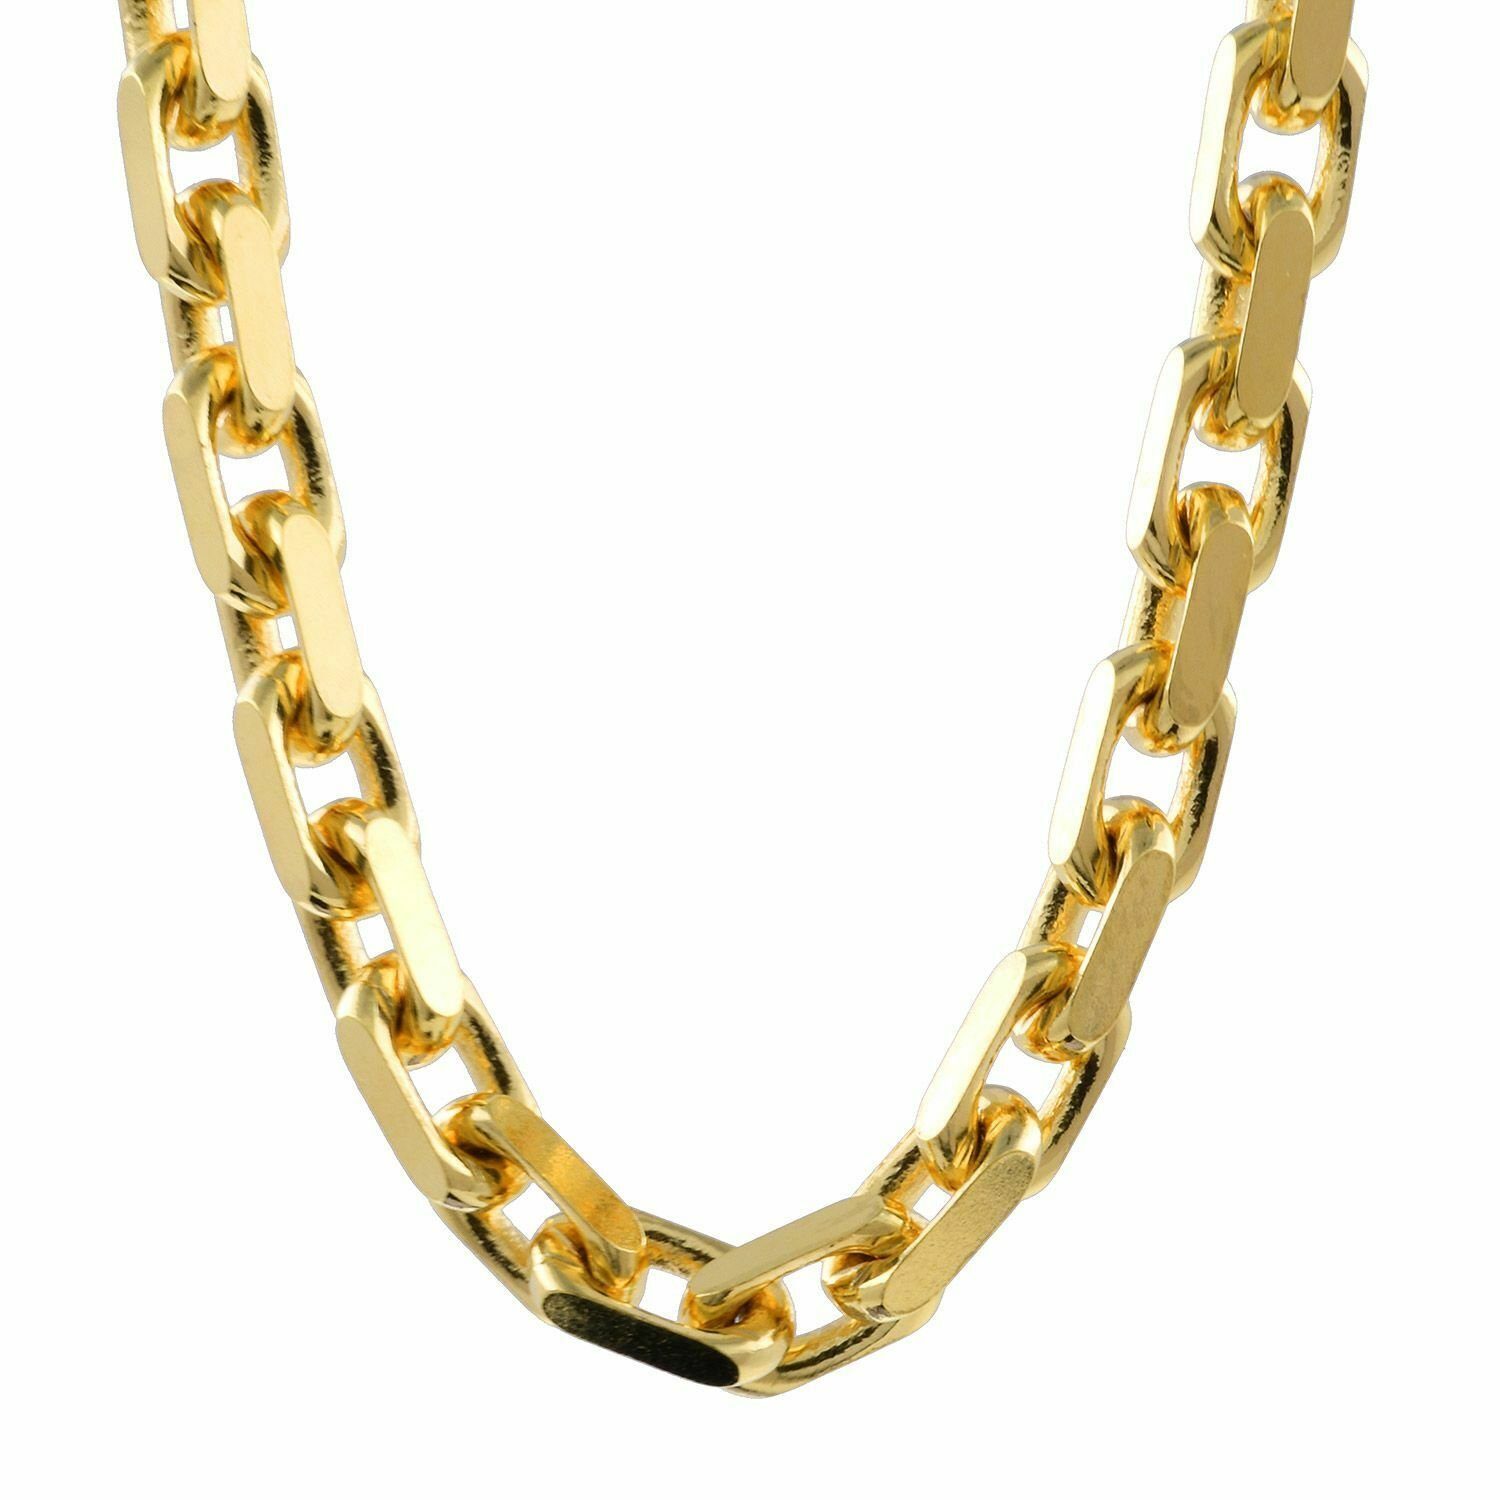 HOPLO Goldkette Ankerkette diamantiert 750 - 18 Karat Gold 4,0 mm Kettenlänge 60 cm (inkl. Schmuckbox), Made in Germany